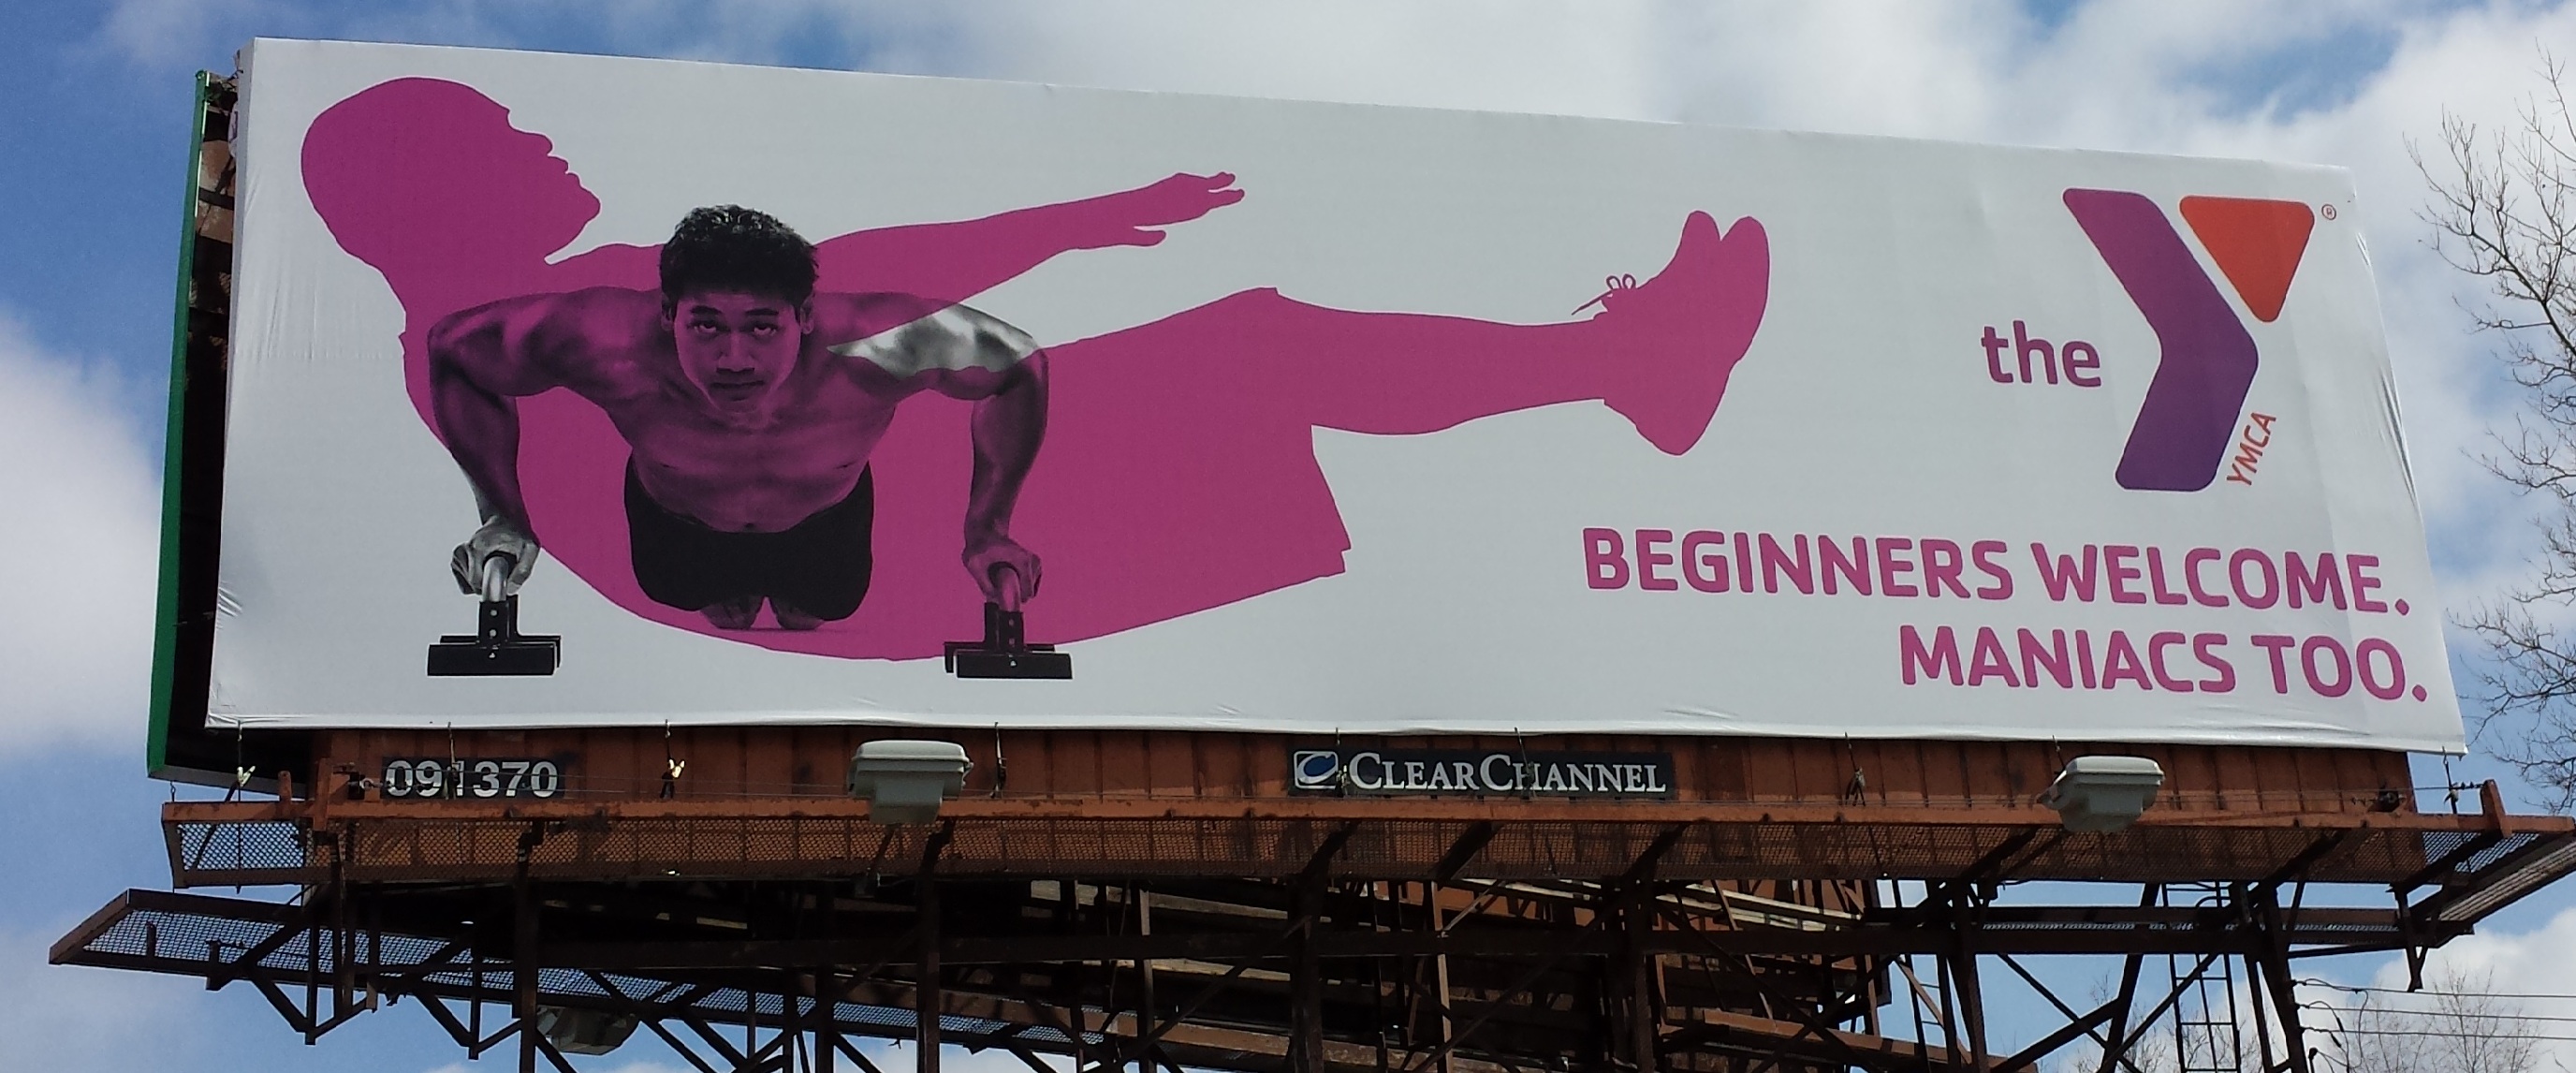 YMCA Billboard Ad